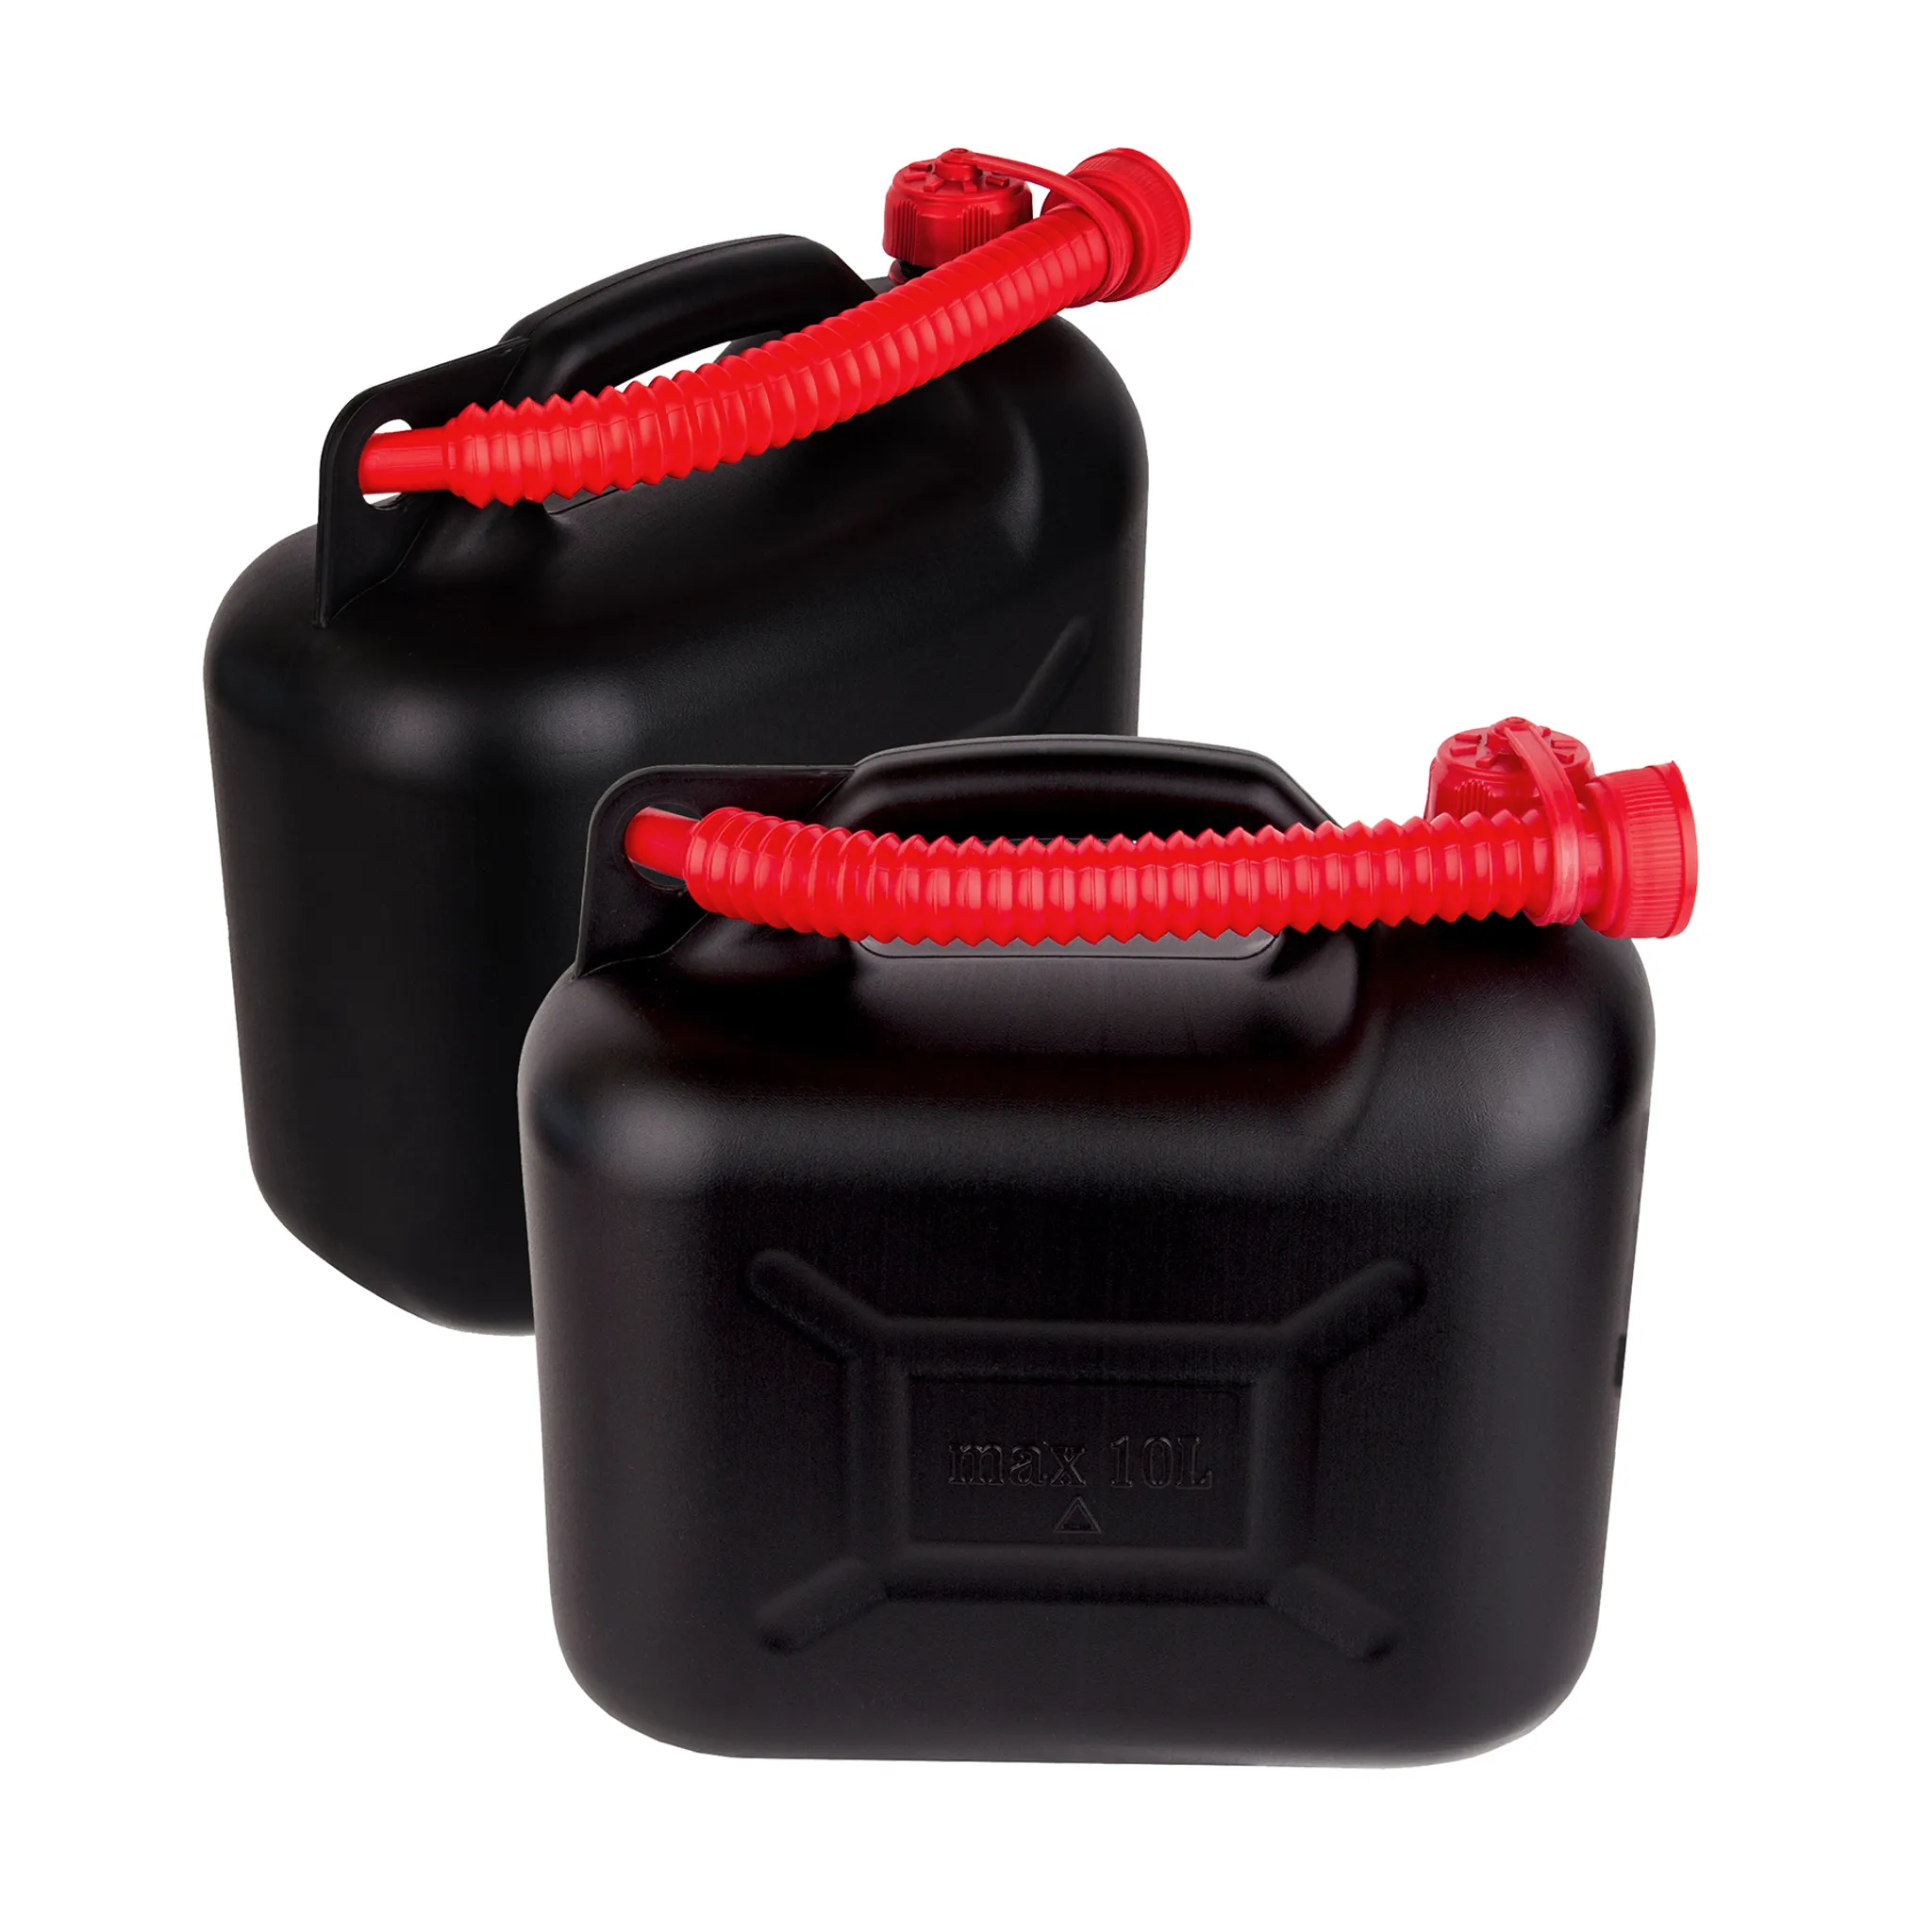 Pressol Kraftstoffkanister Kunststoff, 5 l, rot flexibles